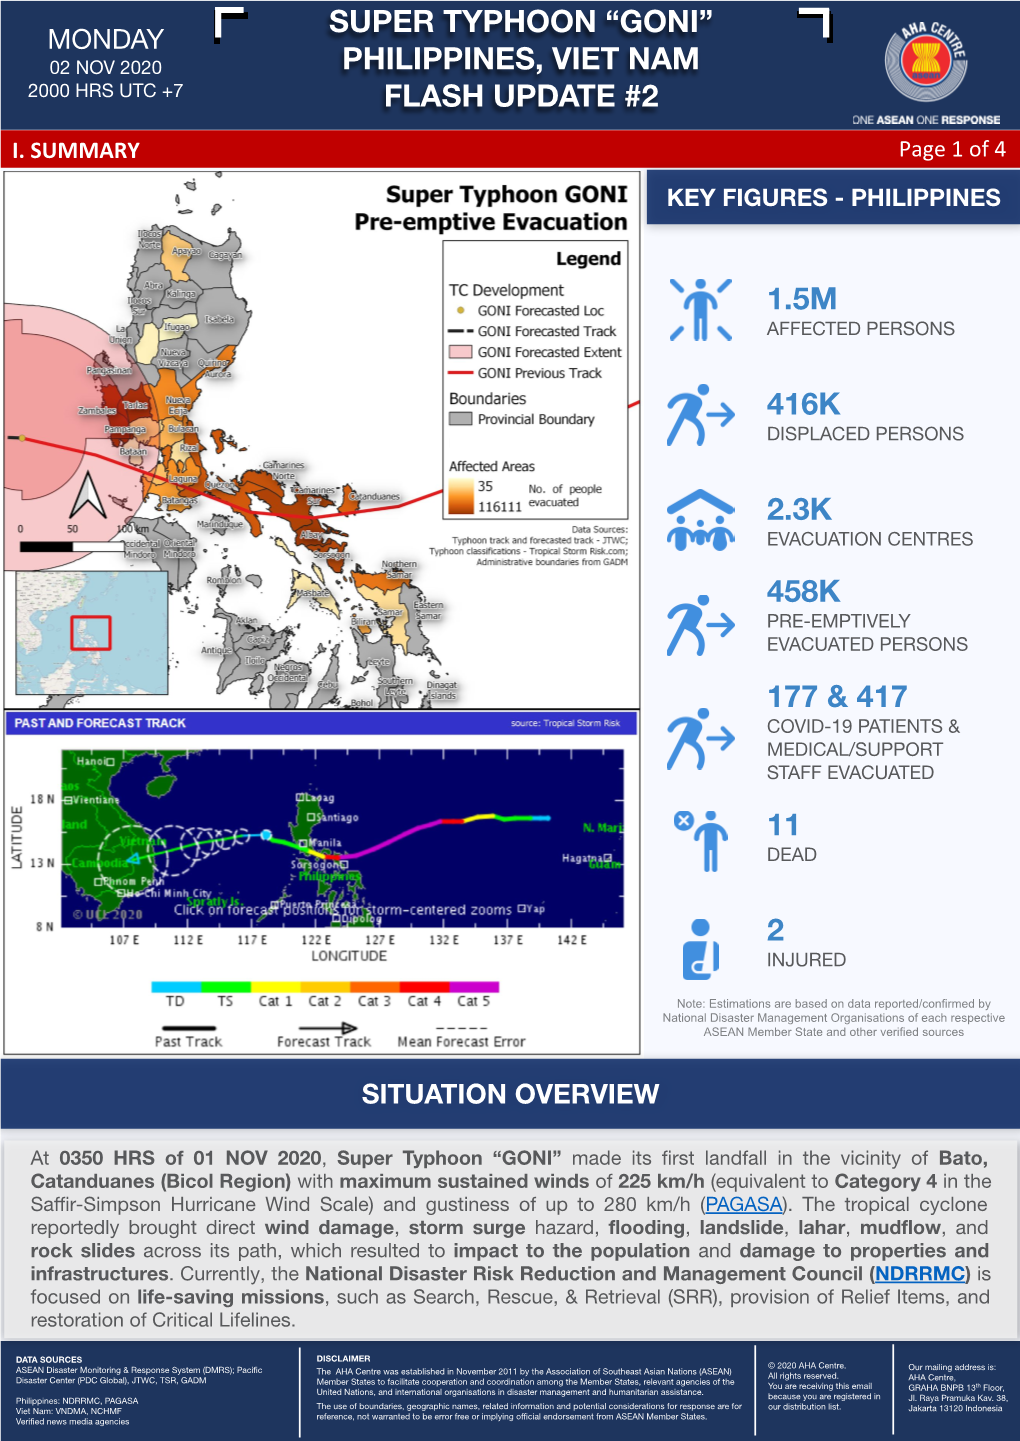 Super Typhoon “Goni” Monday 02 Nov 2020 Philippines, Viet Nam 2000 Hrs Utc +7 Flash Update #2